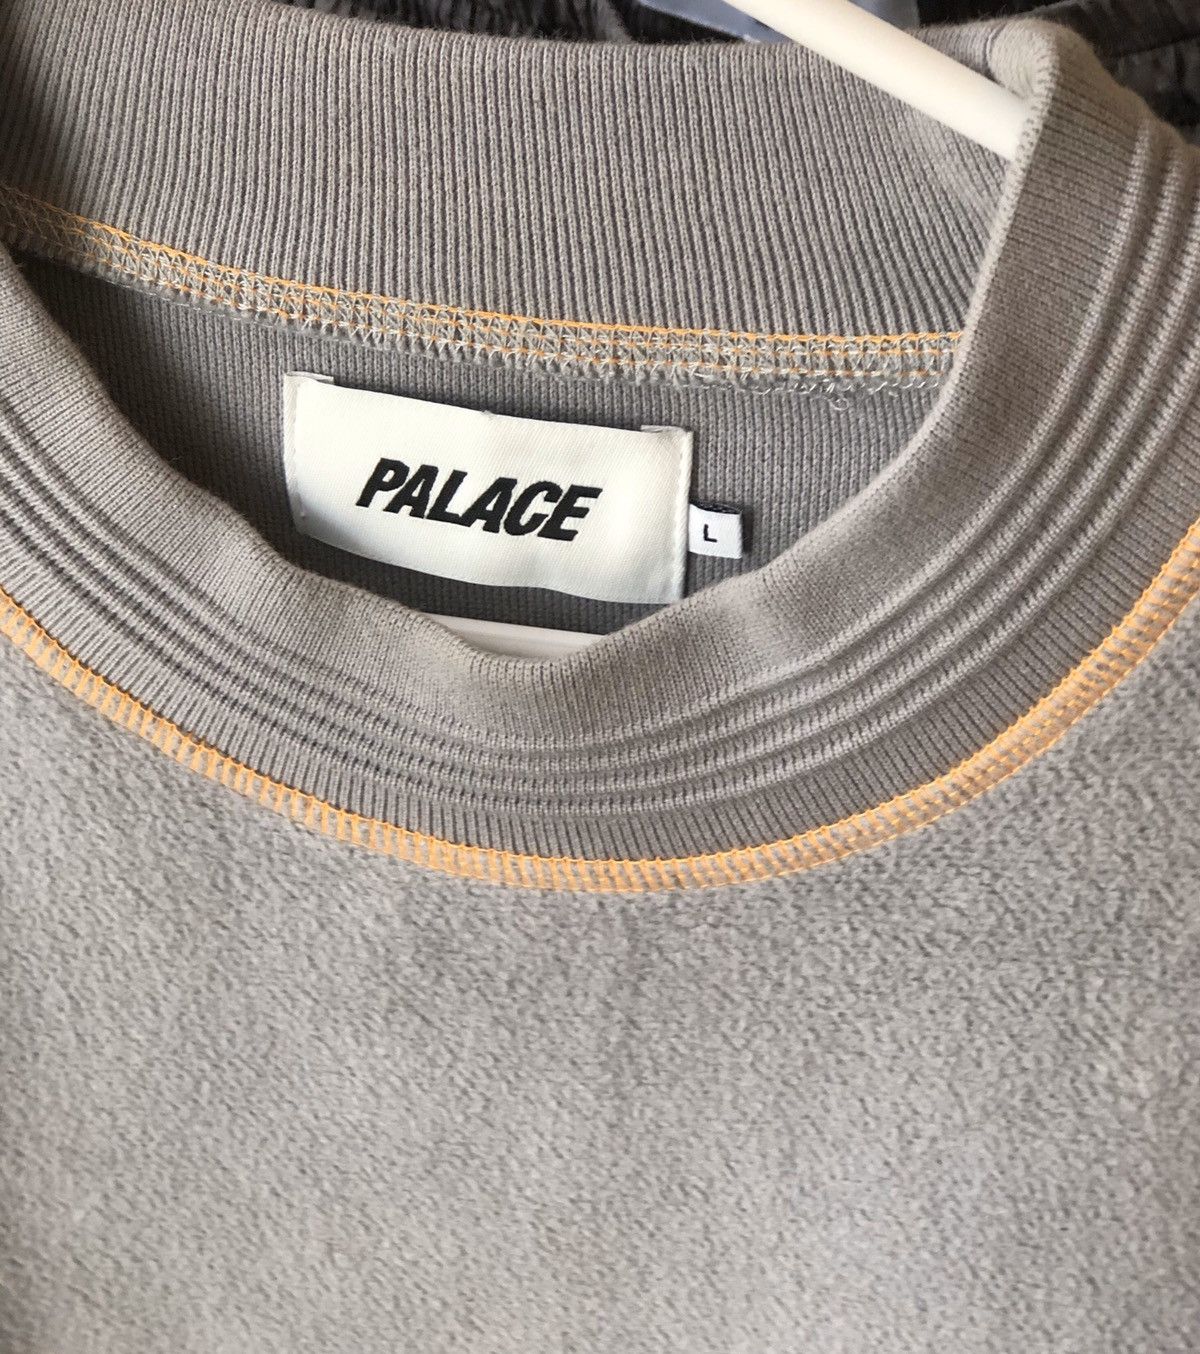 Palace Palace sweater crew neck Size US L / EU 52-54 / 3 - 6 Thumbnail